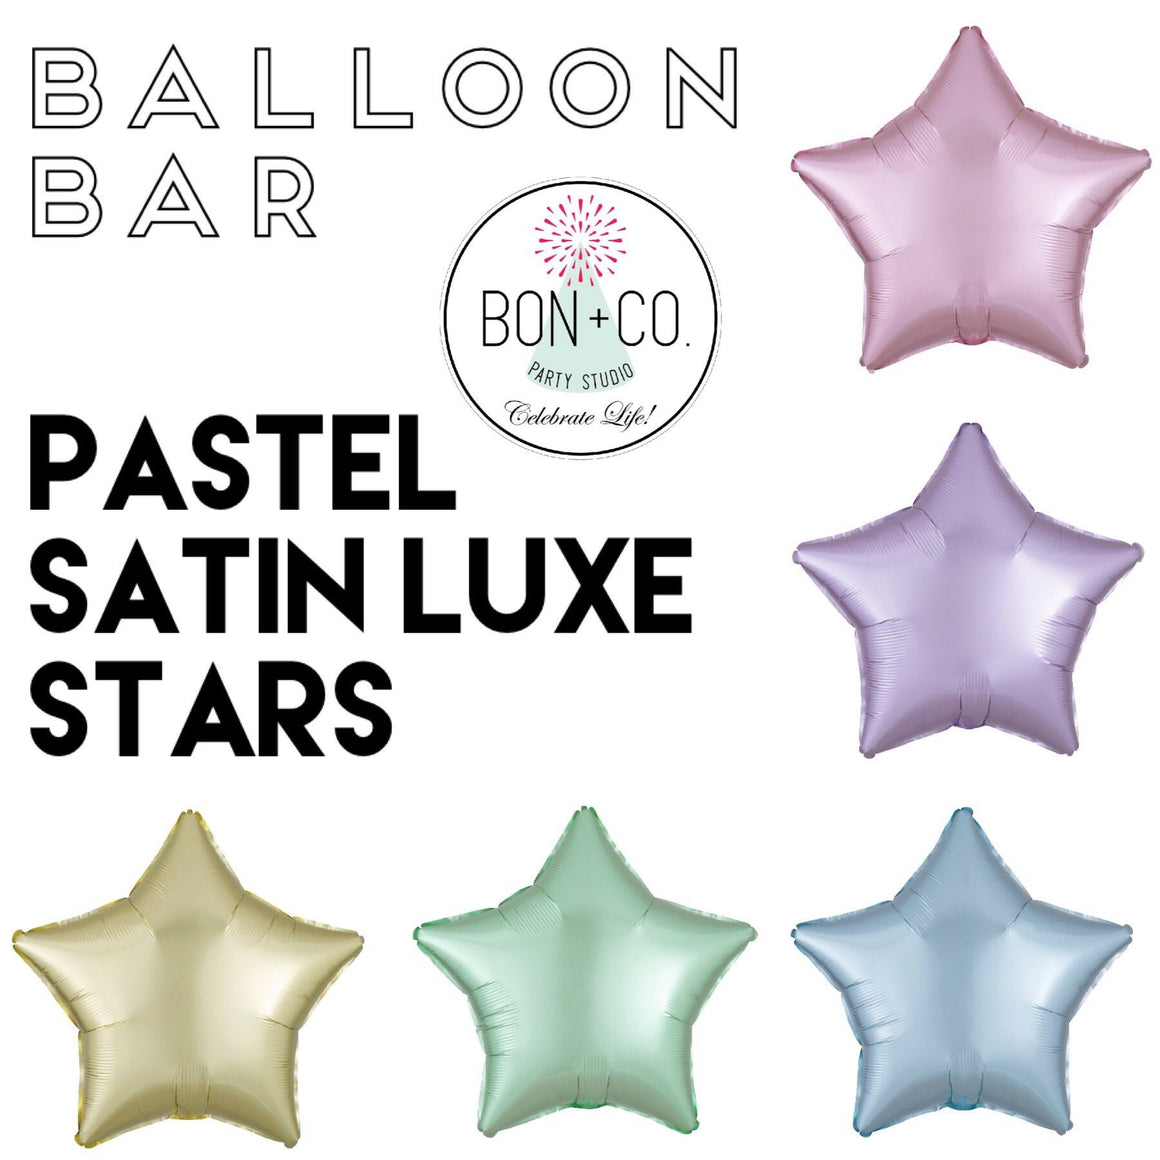 BALLOON BAR - STAR SATIN LUXE PASTEL, Balloons, Anagram - Bon + Co. Party Studio